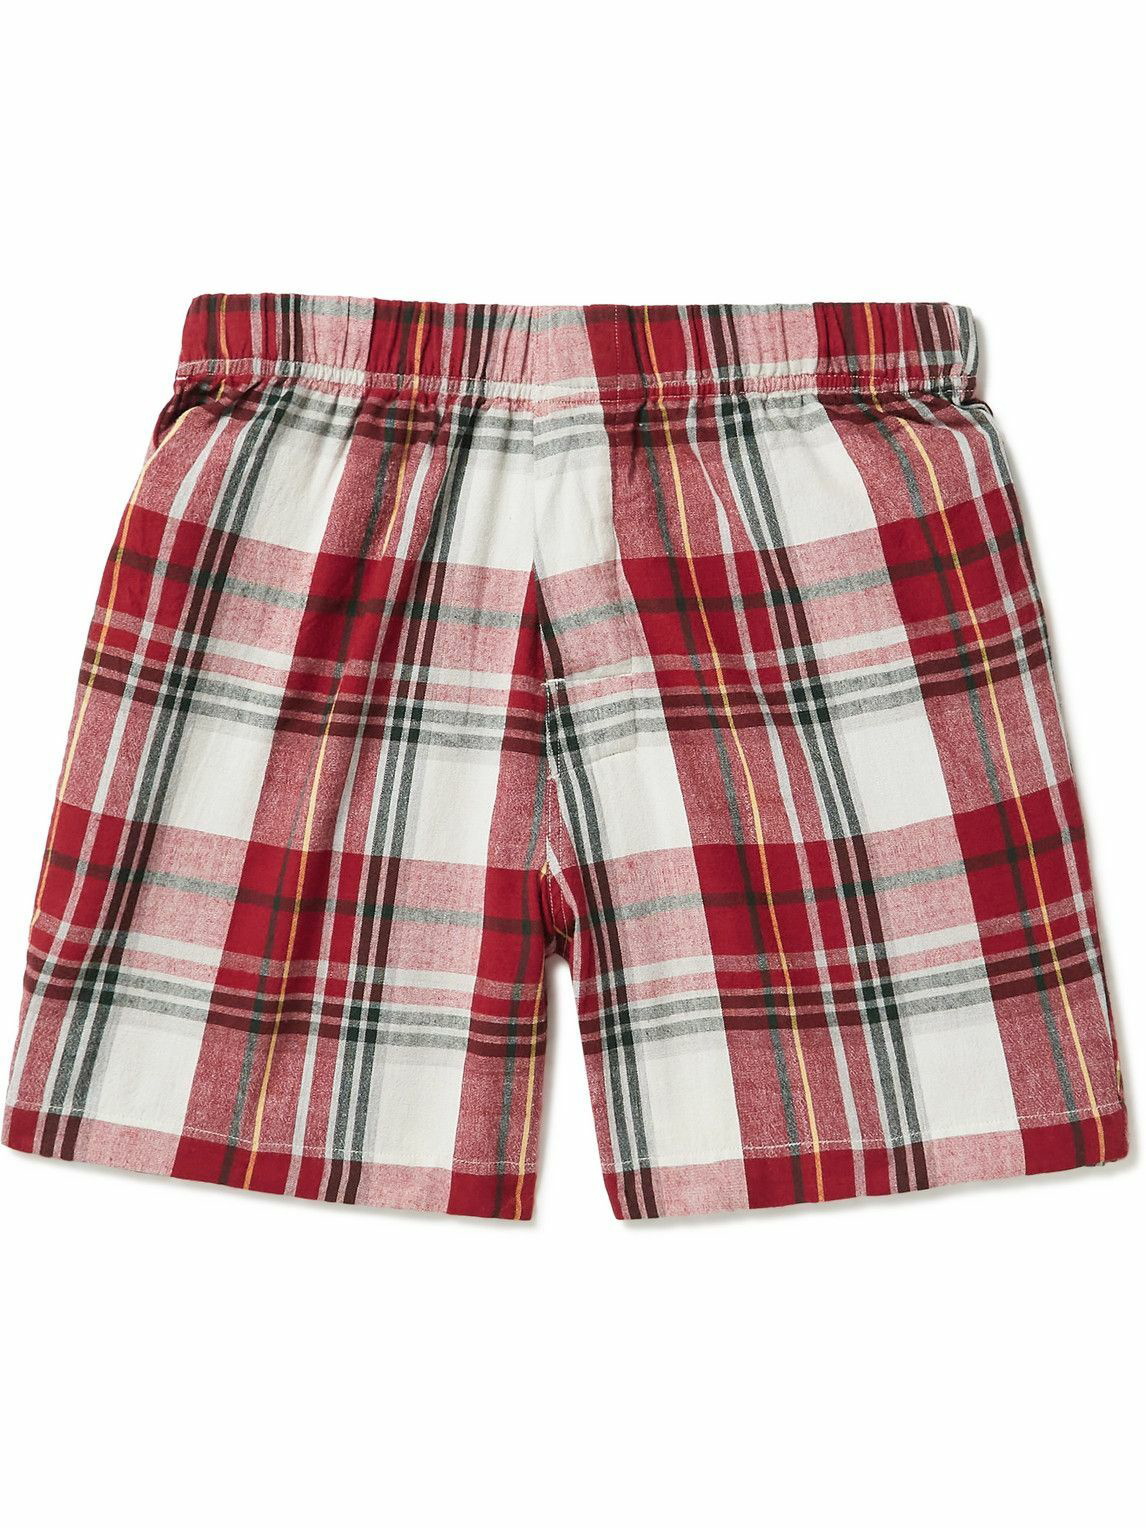 Original Madras - Checked Cotton Pyjama Shorts - Red